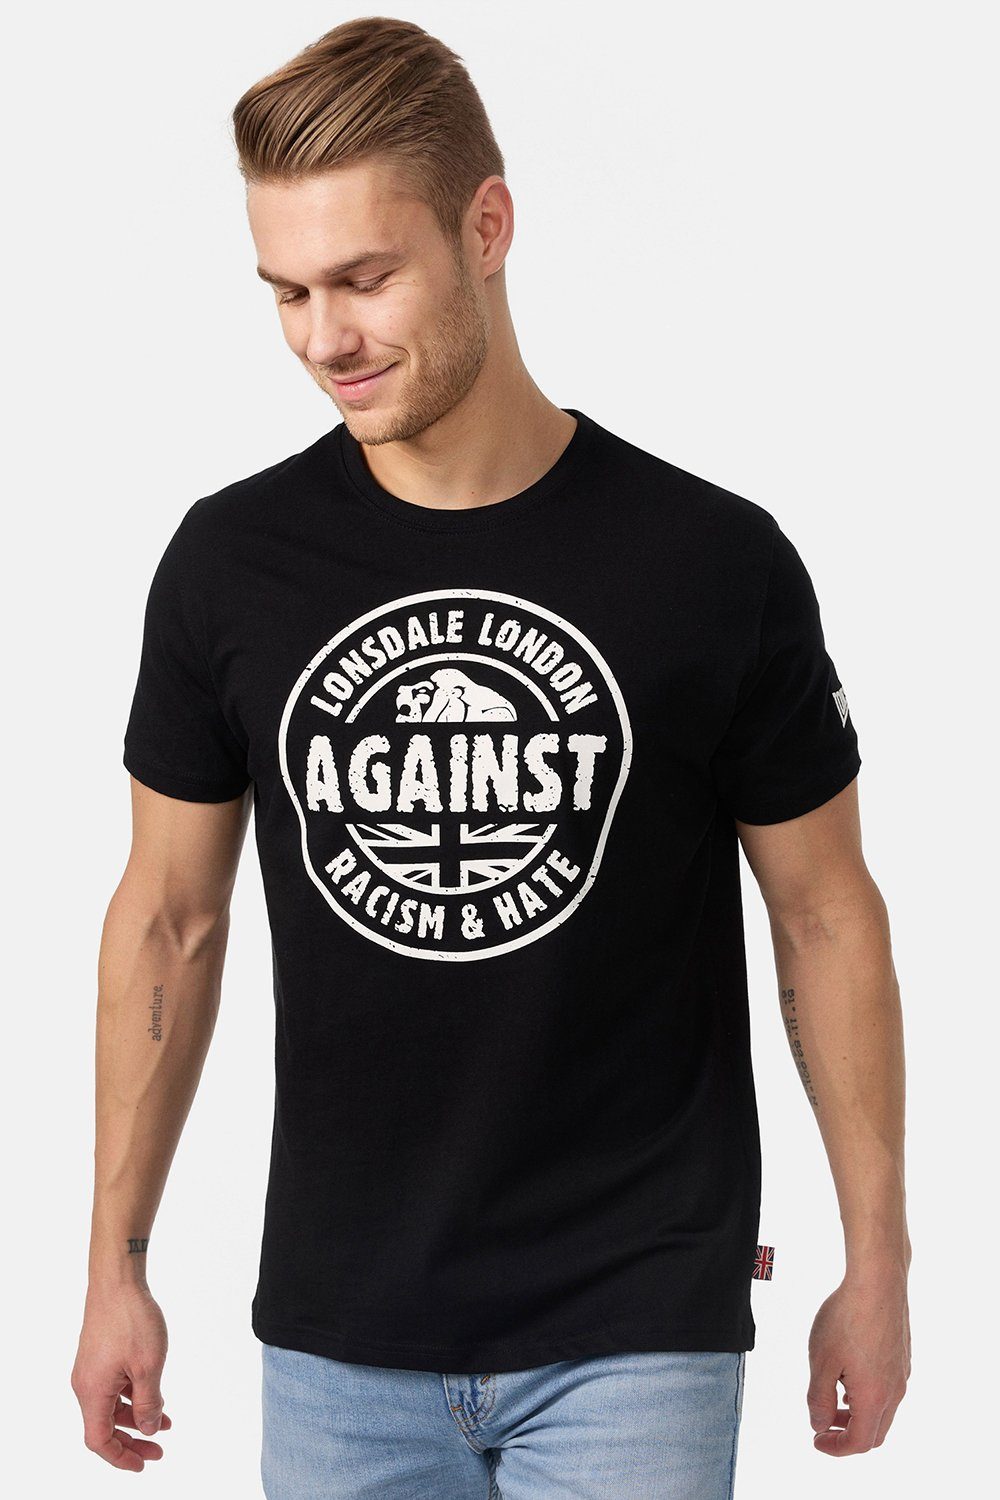 AGAINST RACISM T-Shirt Lonsdale